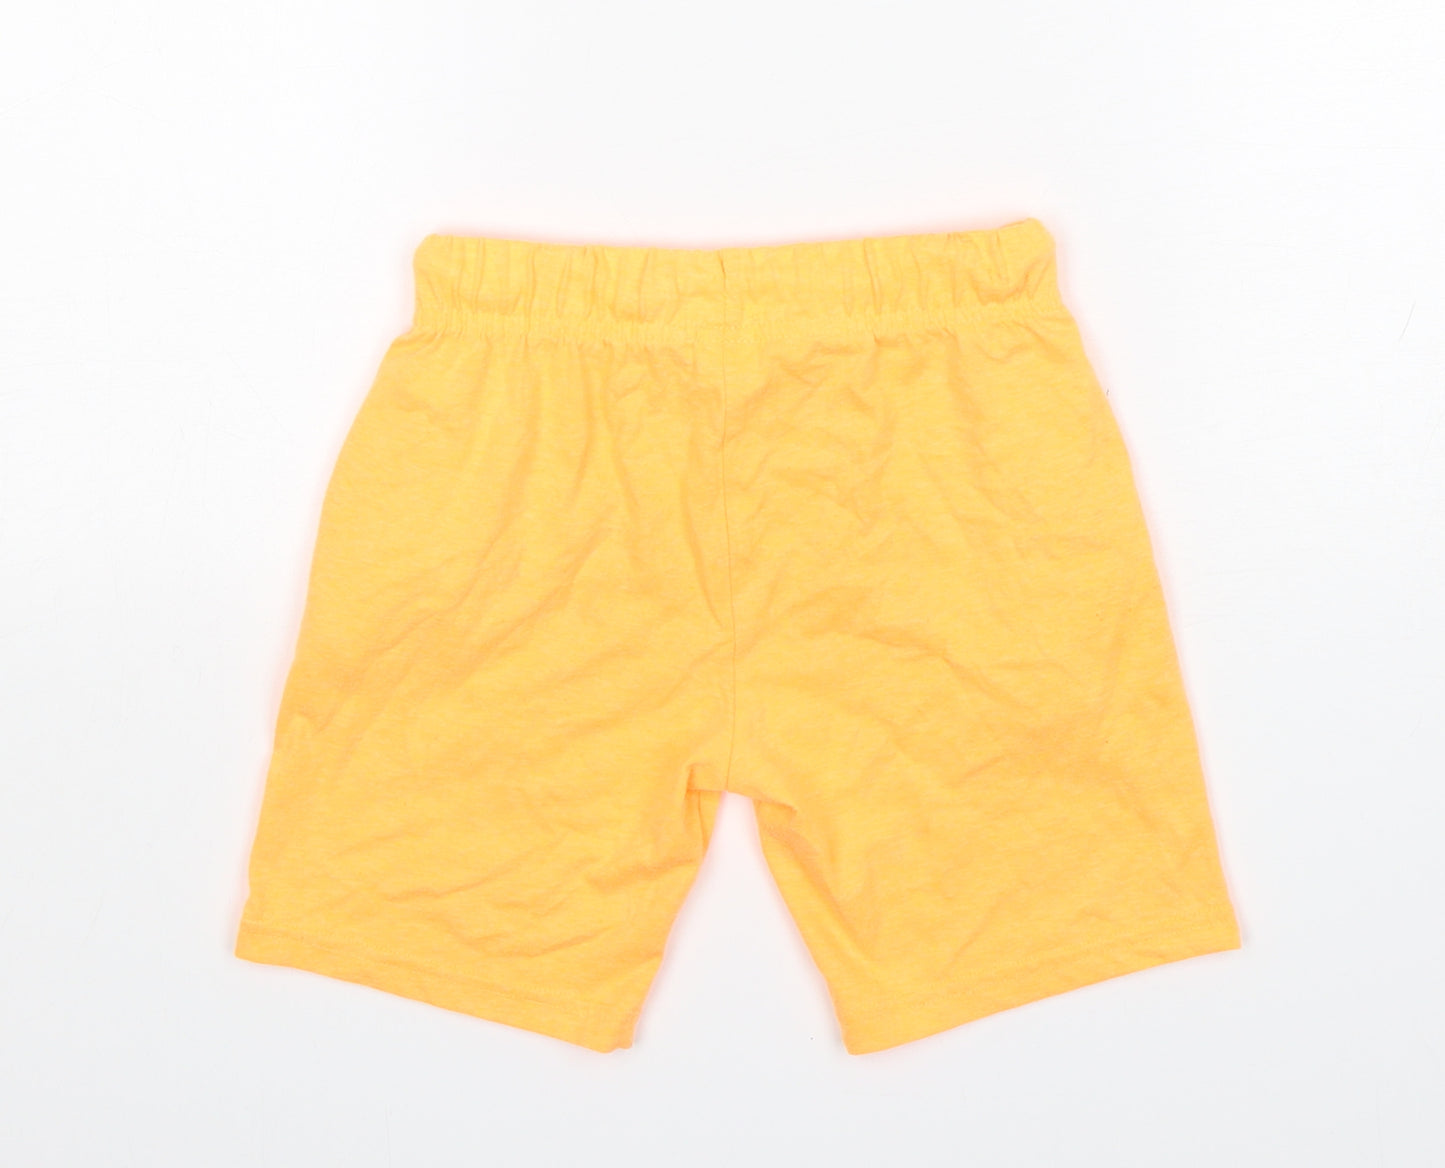 F&F Boys Orange  Cotton Sweat Shorts Size 5-6 Years  Regular